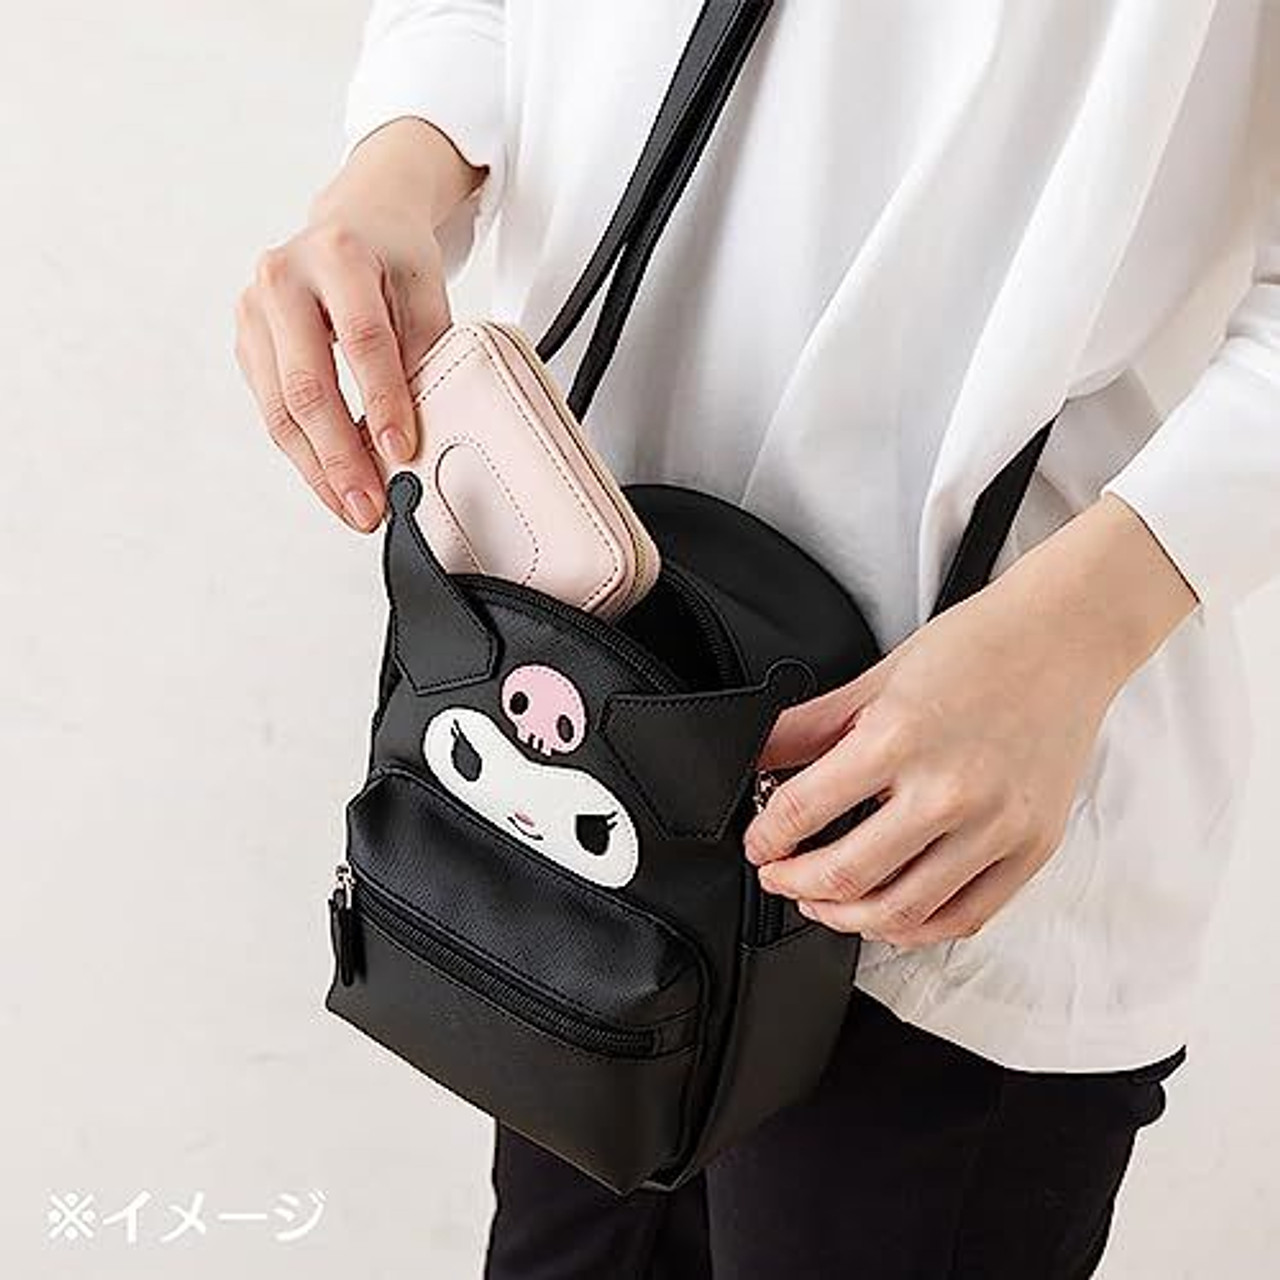 Sanrio - My Melody Pochette Handbag with Charm